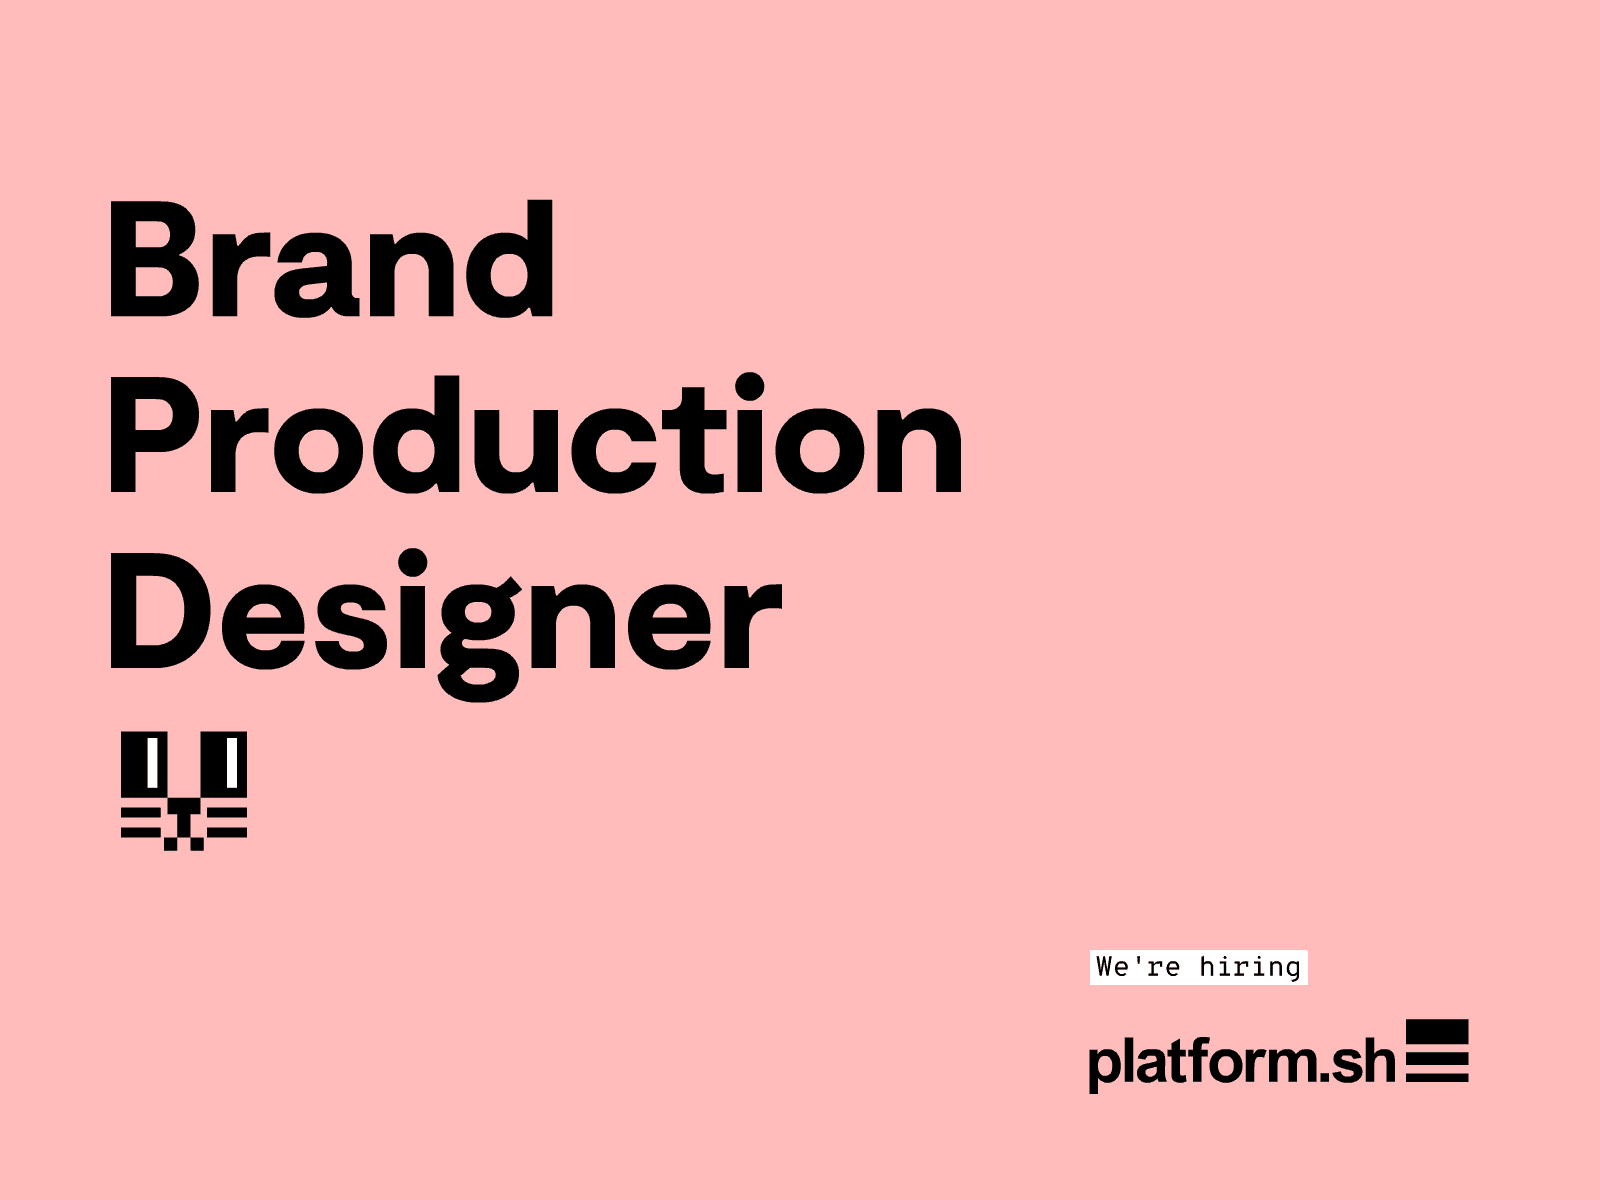 Brand Production Designer brand designer hiring job production